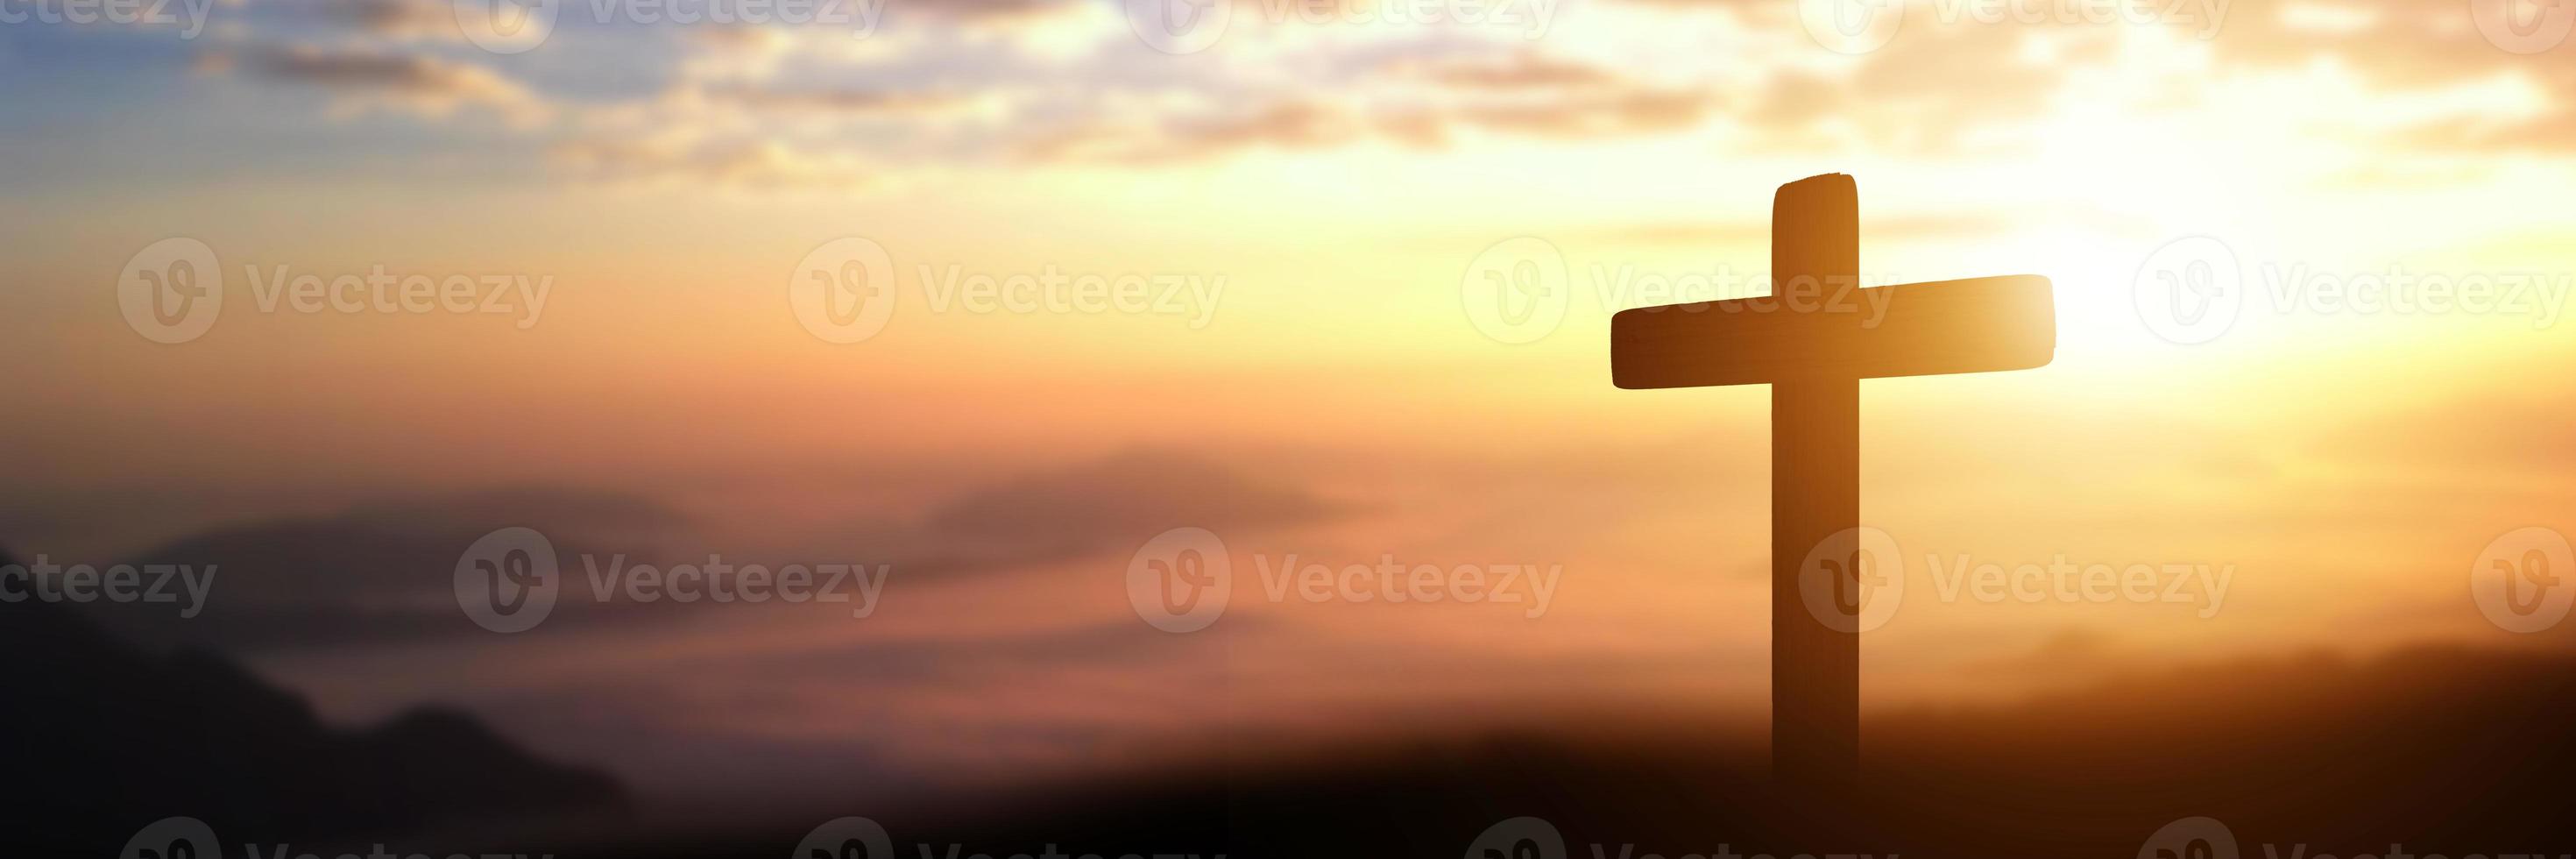 silueta de cruz católica al fondo del atardecer. imagen panorámica foto